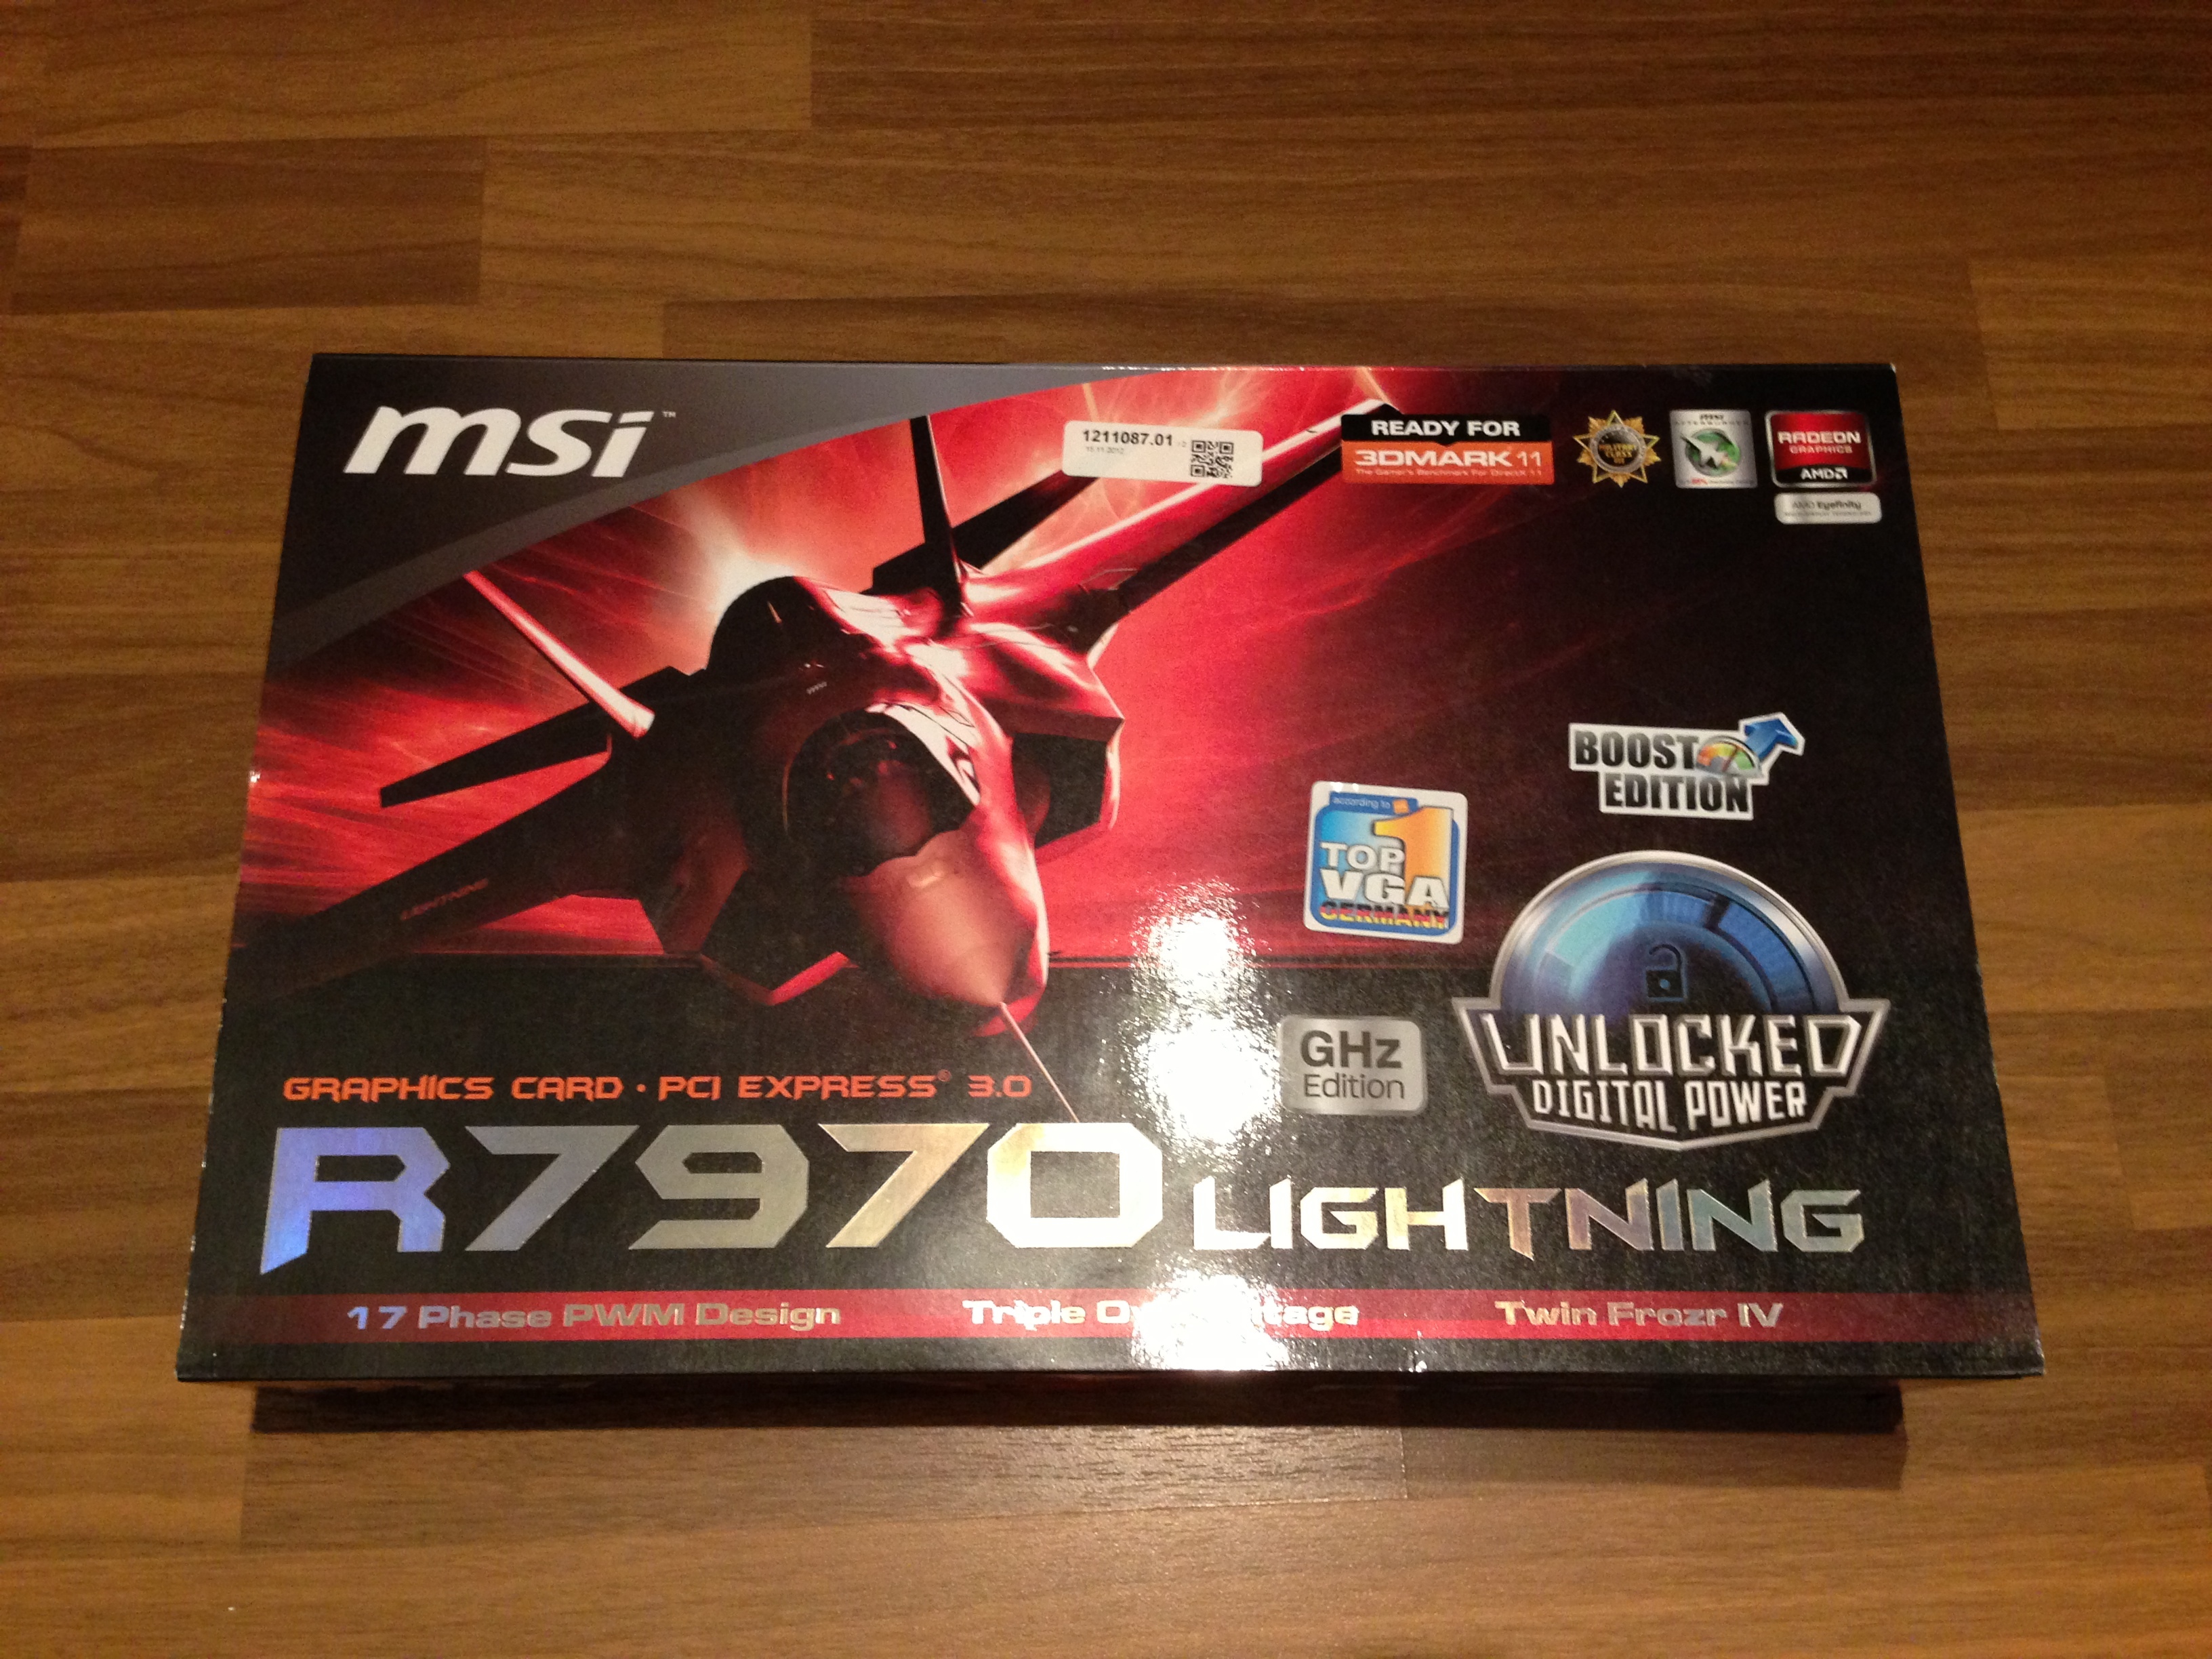 Die Verpackung der 7970 Lightning Boost Edition.